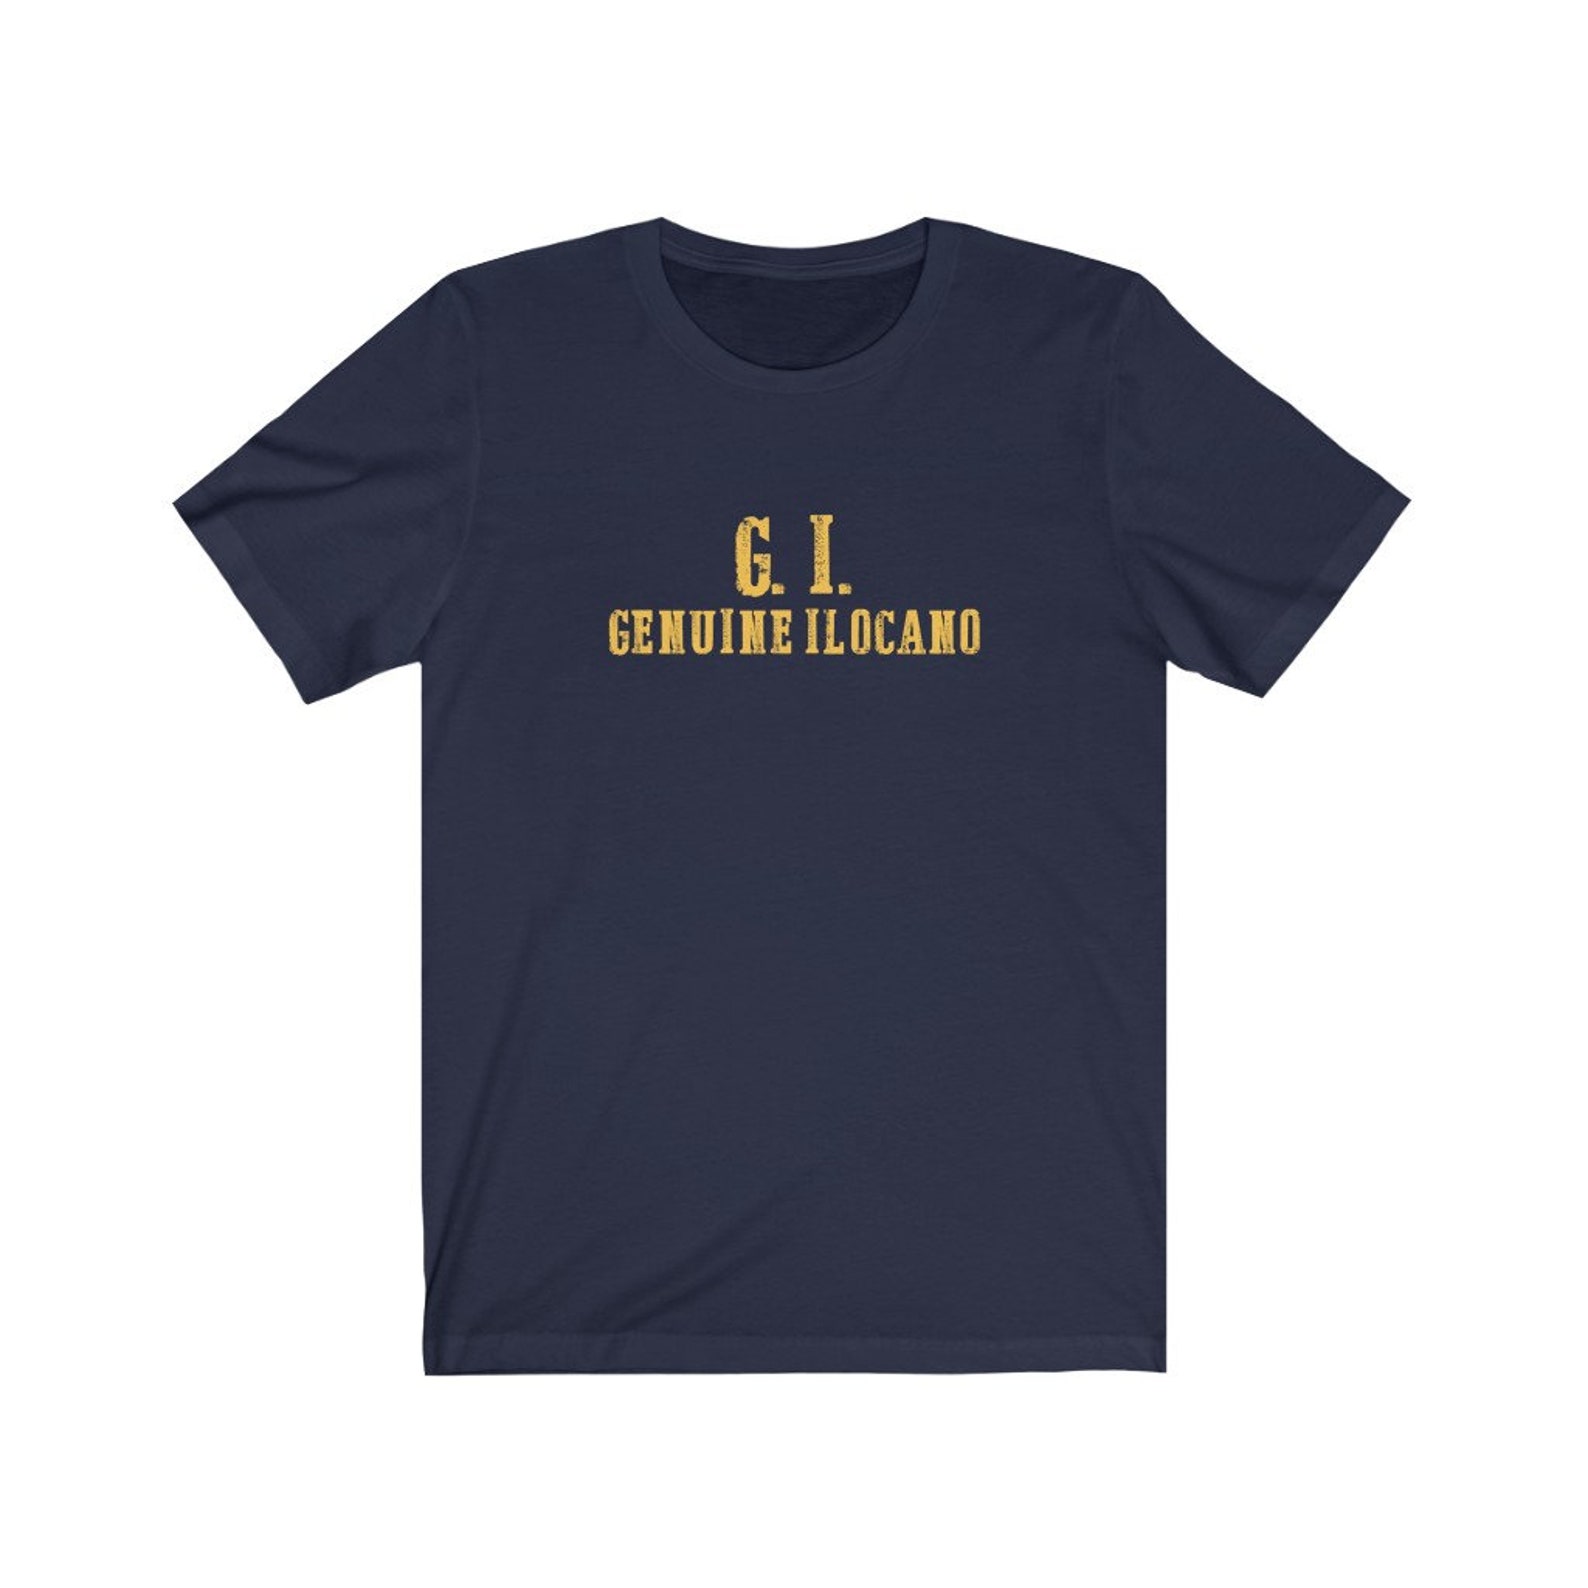 G. I. Genuine Ilocano T-shirt - Etsy